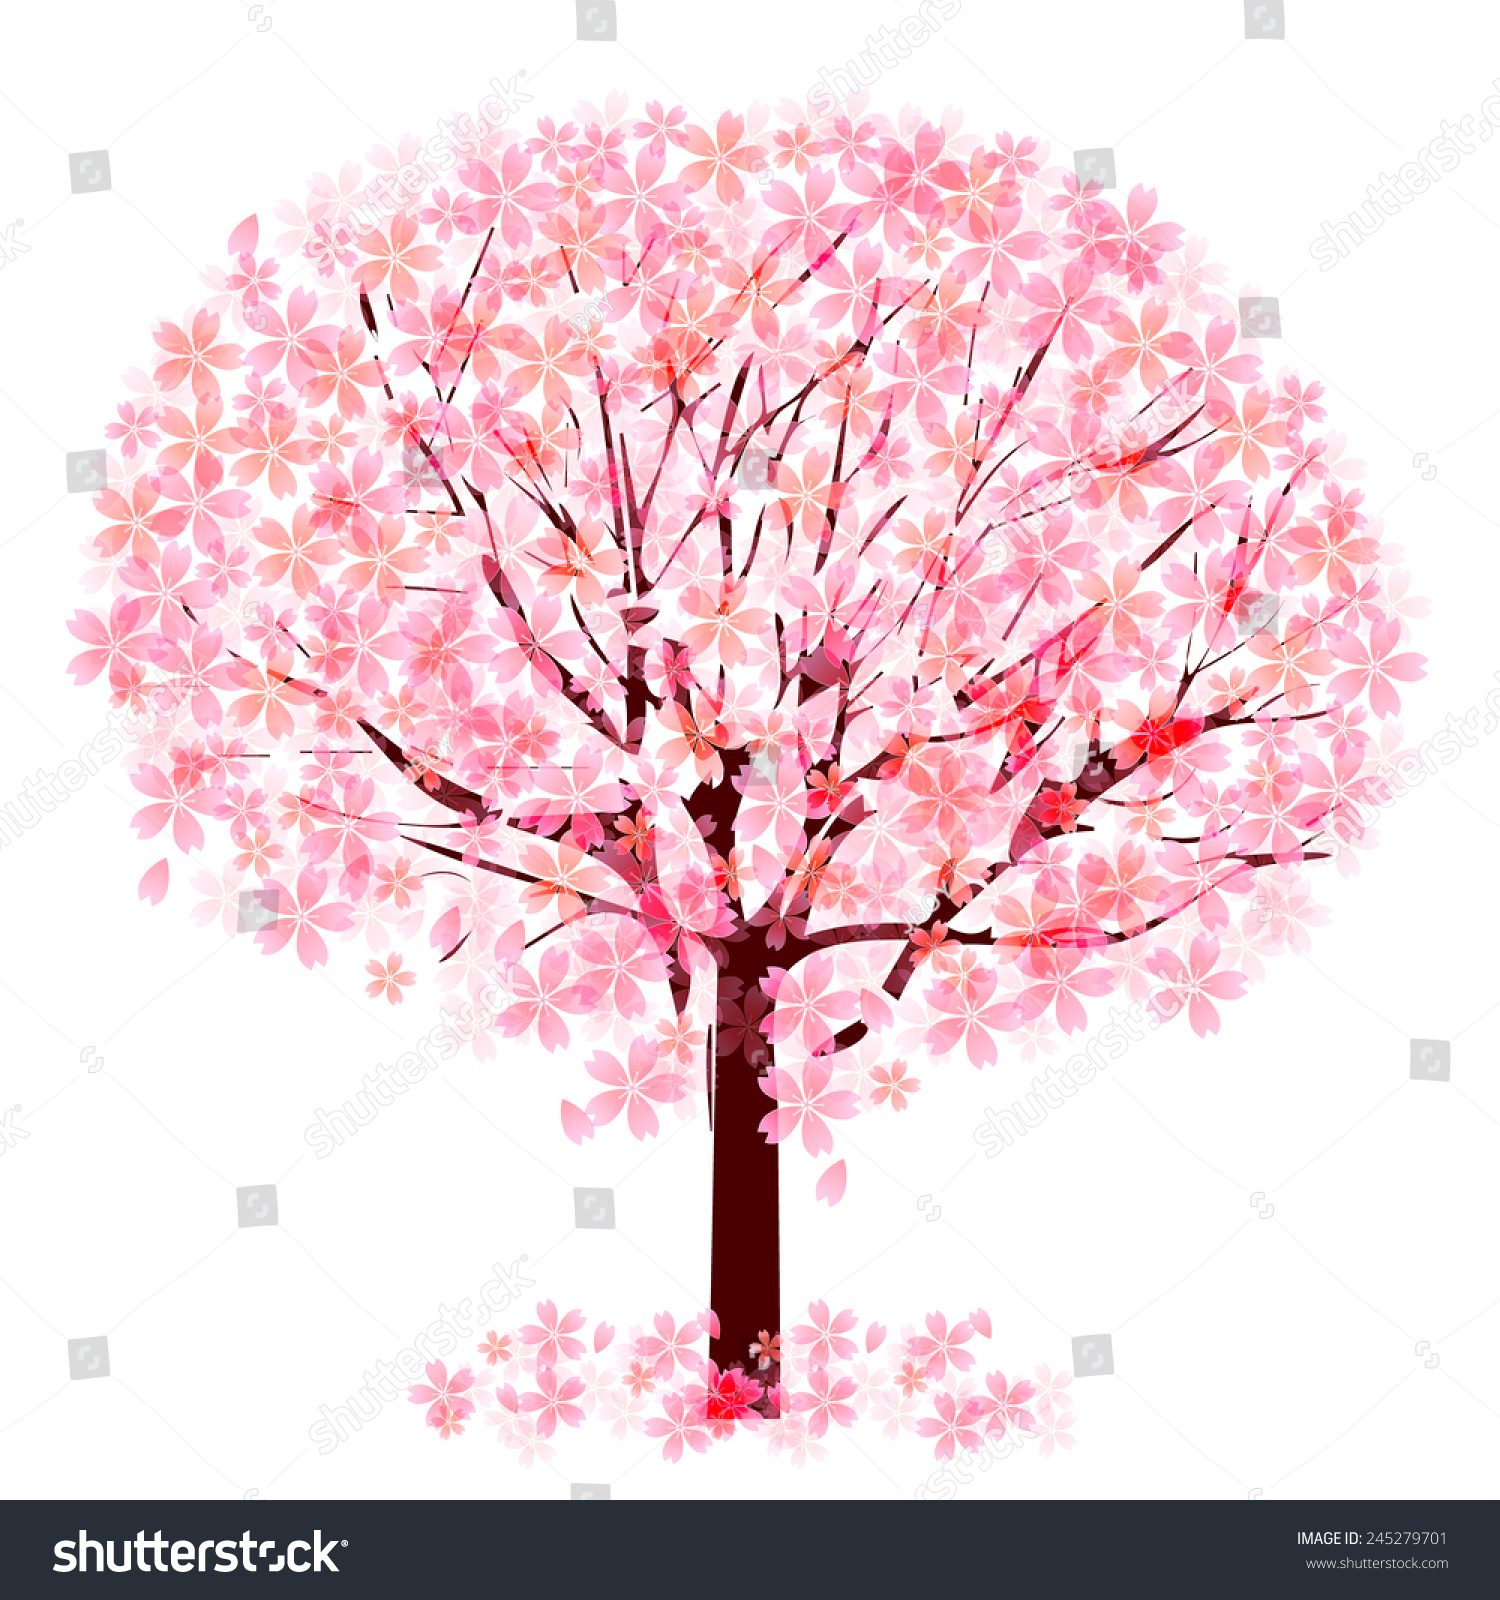 Cherry Blossom Tree Stock Vector 245279701 - Shutterstock